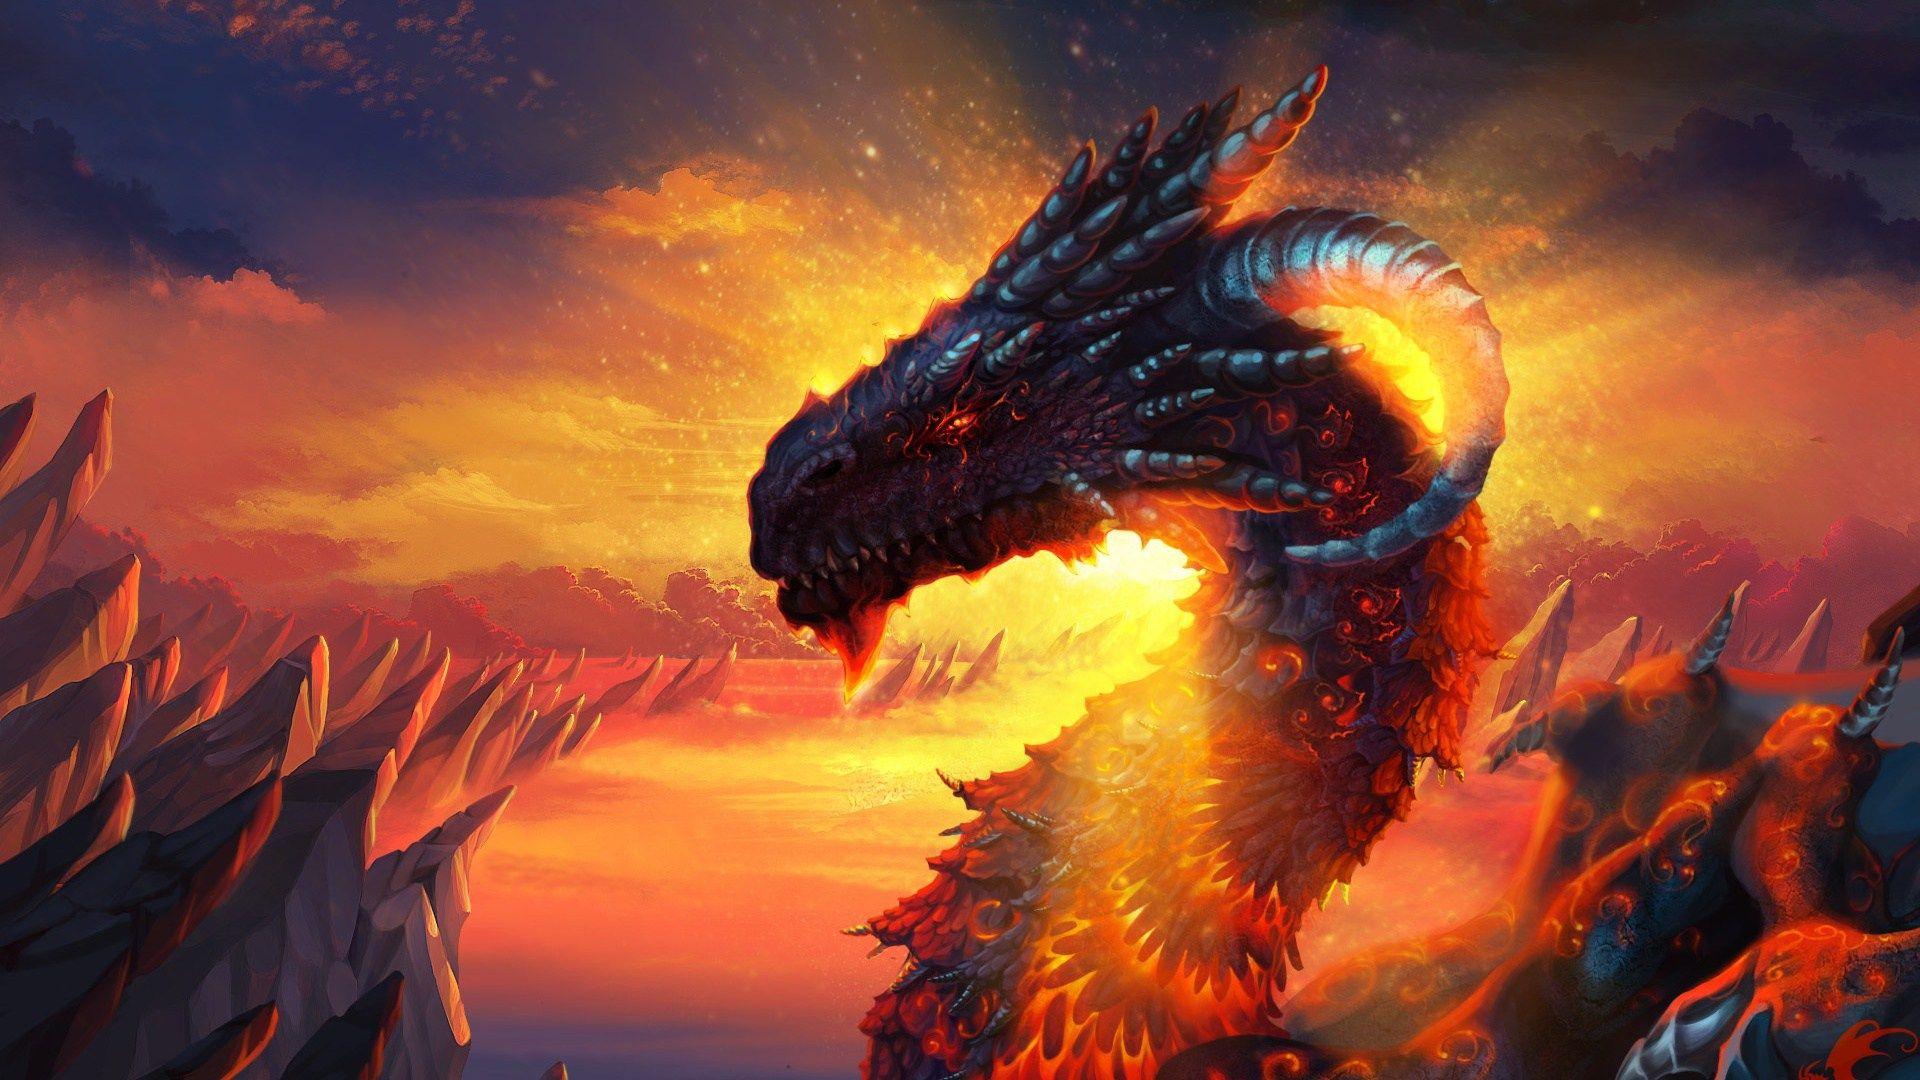 HD Dragon Wallpaper, Image, Background, Desktop Wallpaper